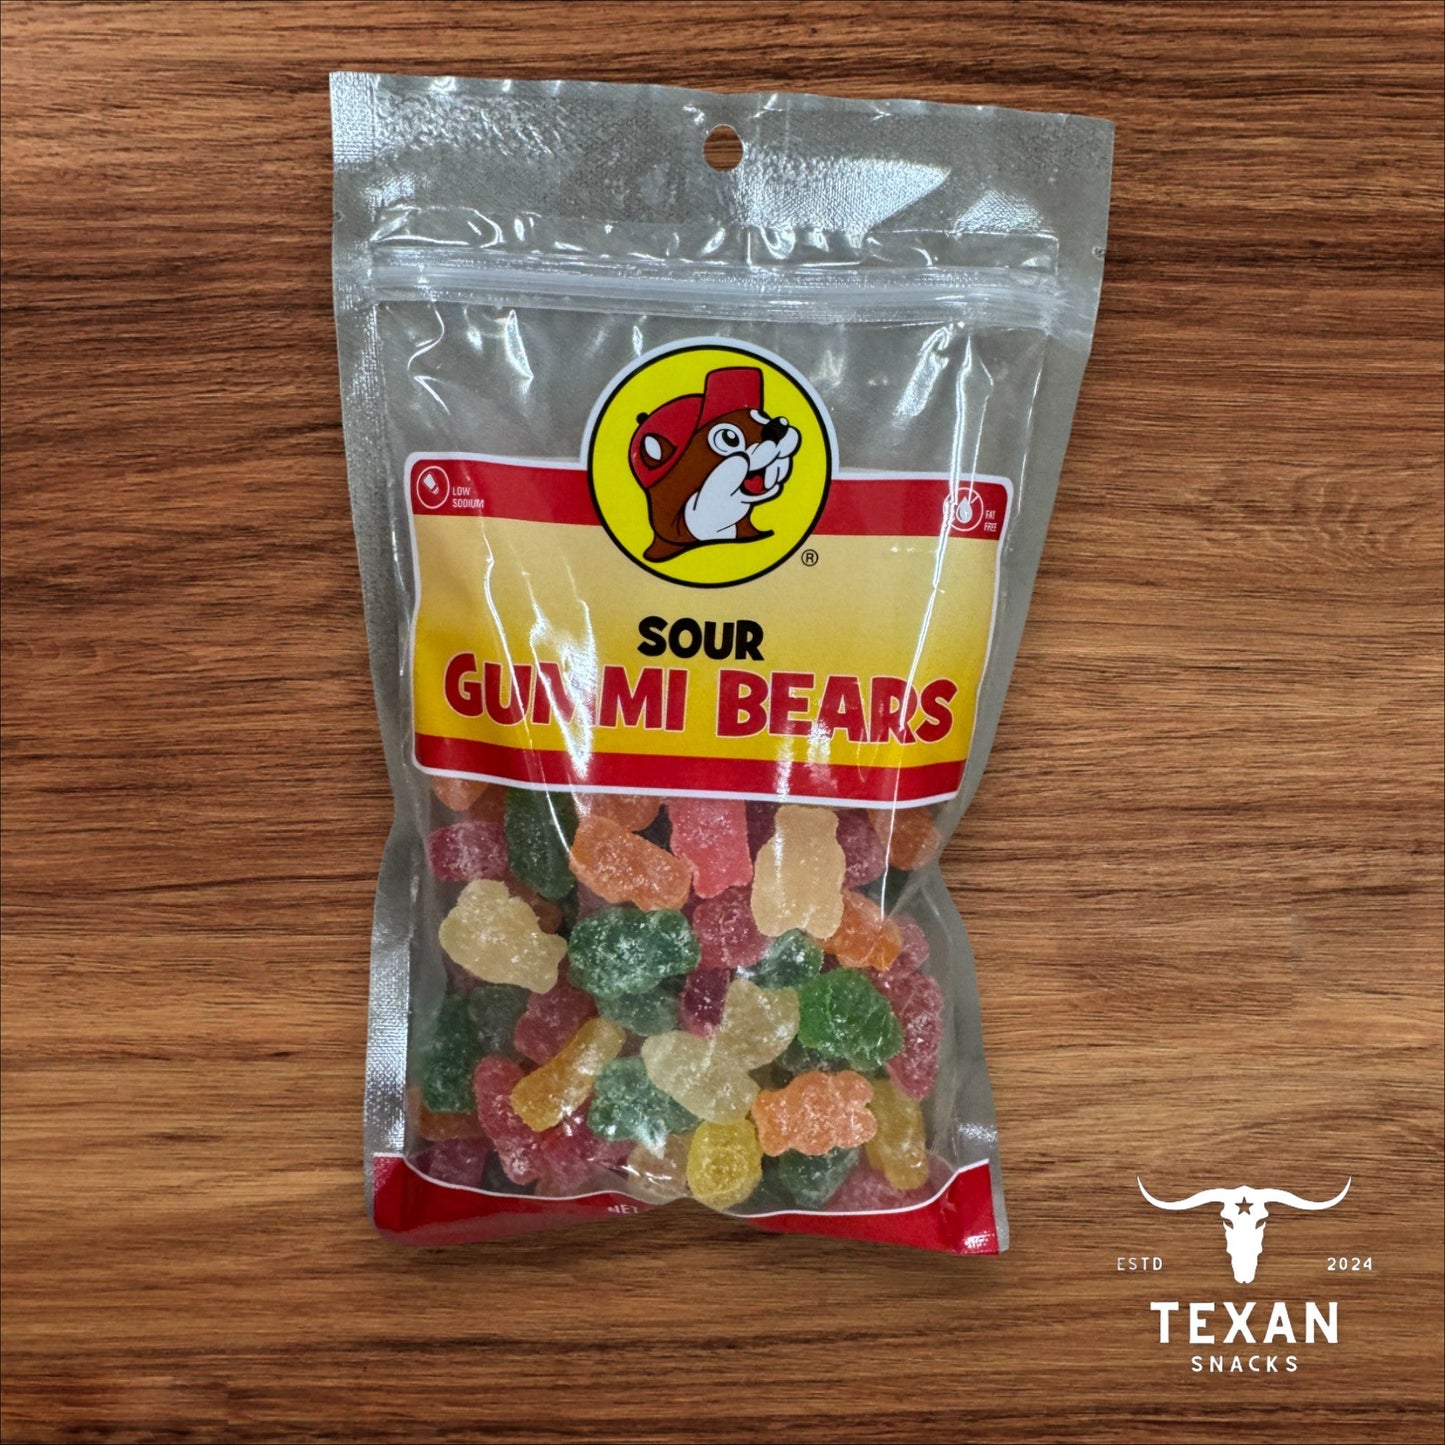 Buc-ee's Sour Gummi Bears